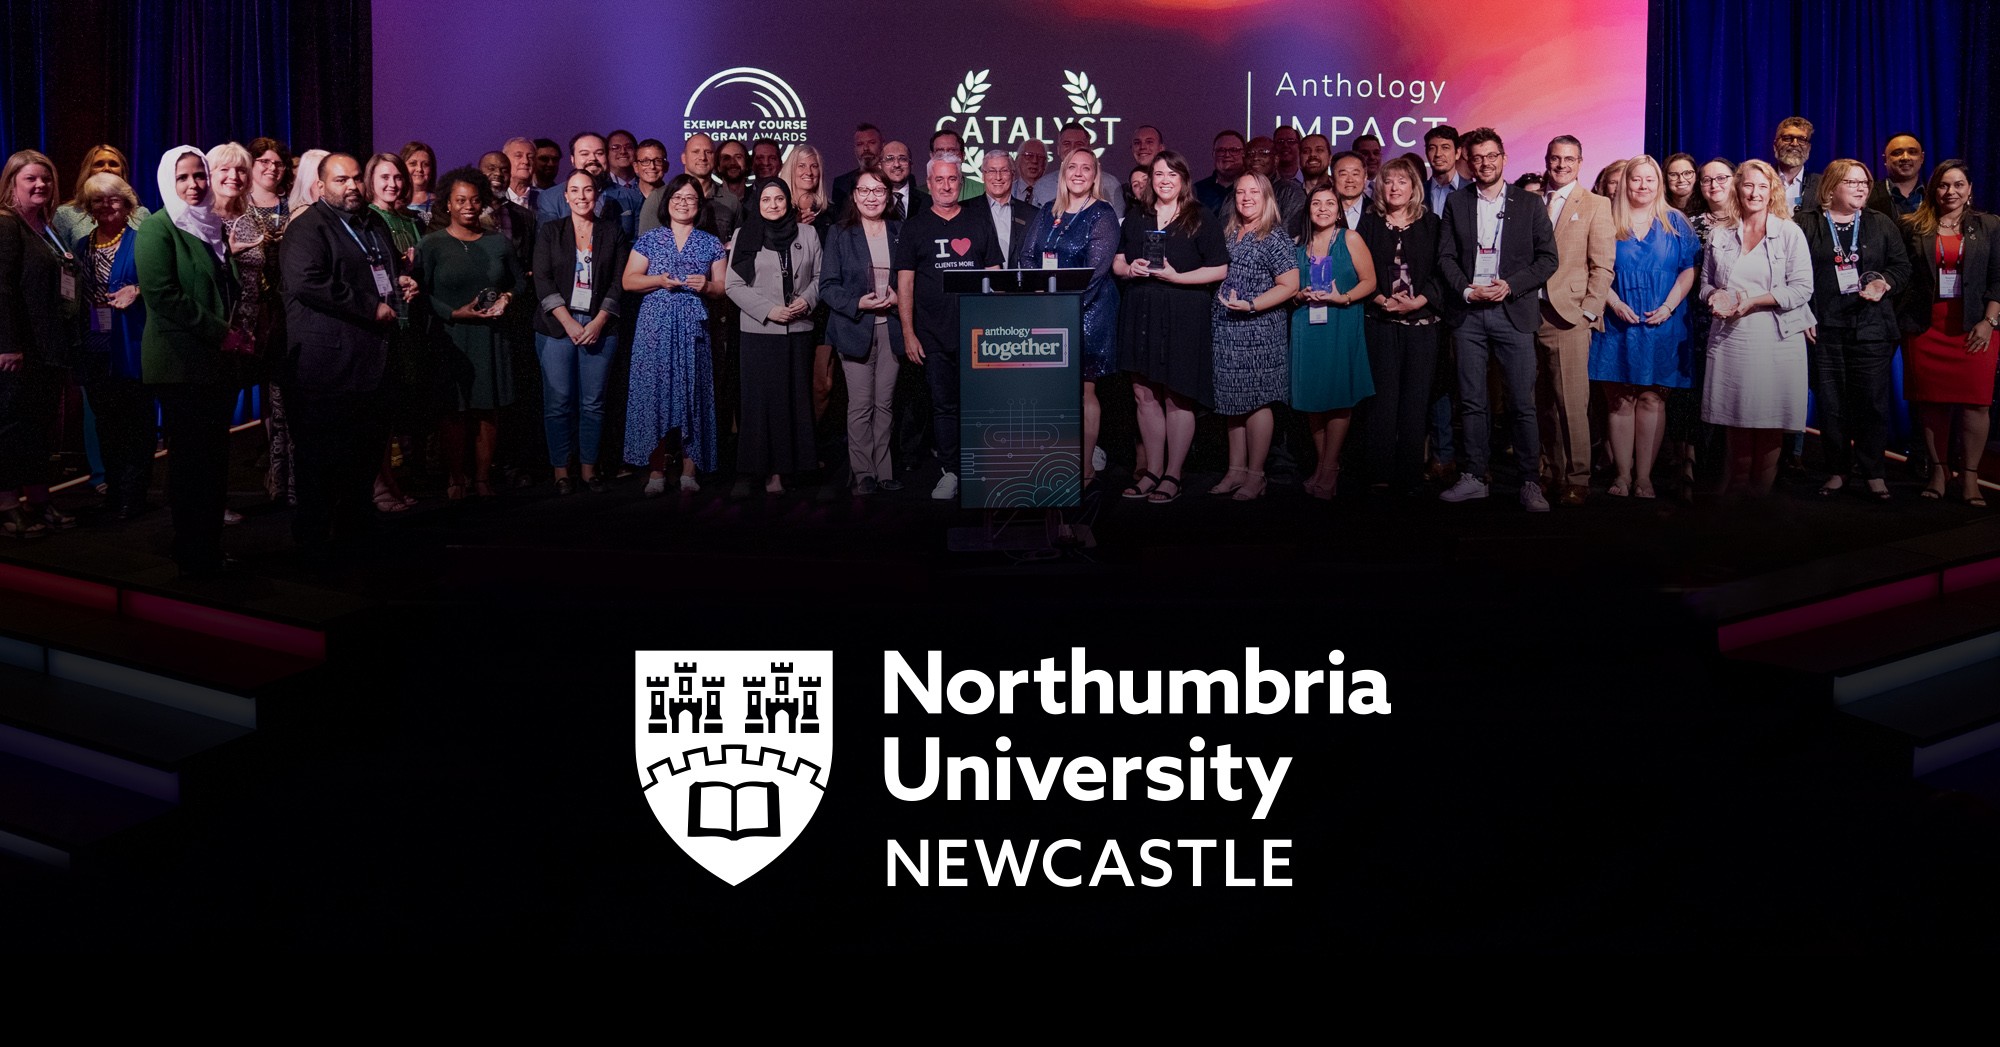 Northumbria University at Catalyst Awards